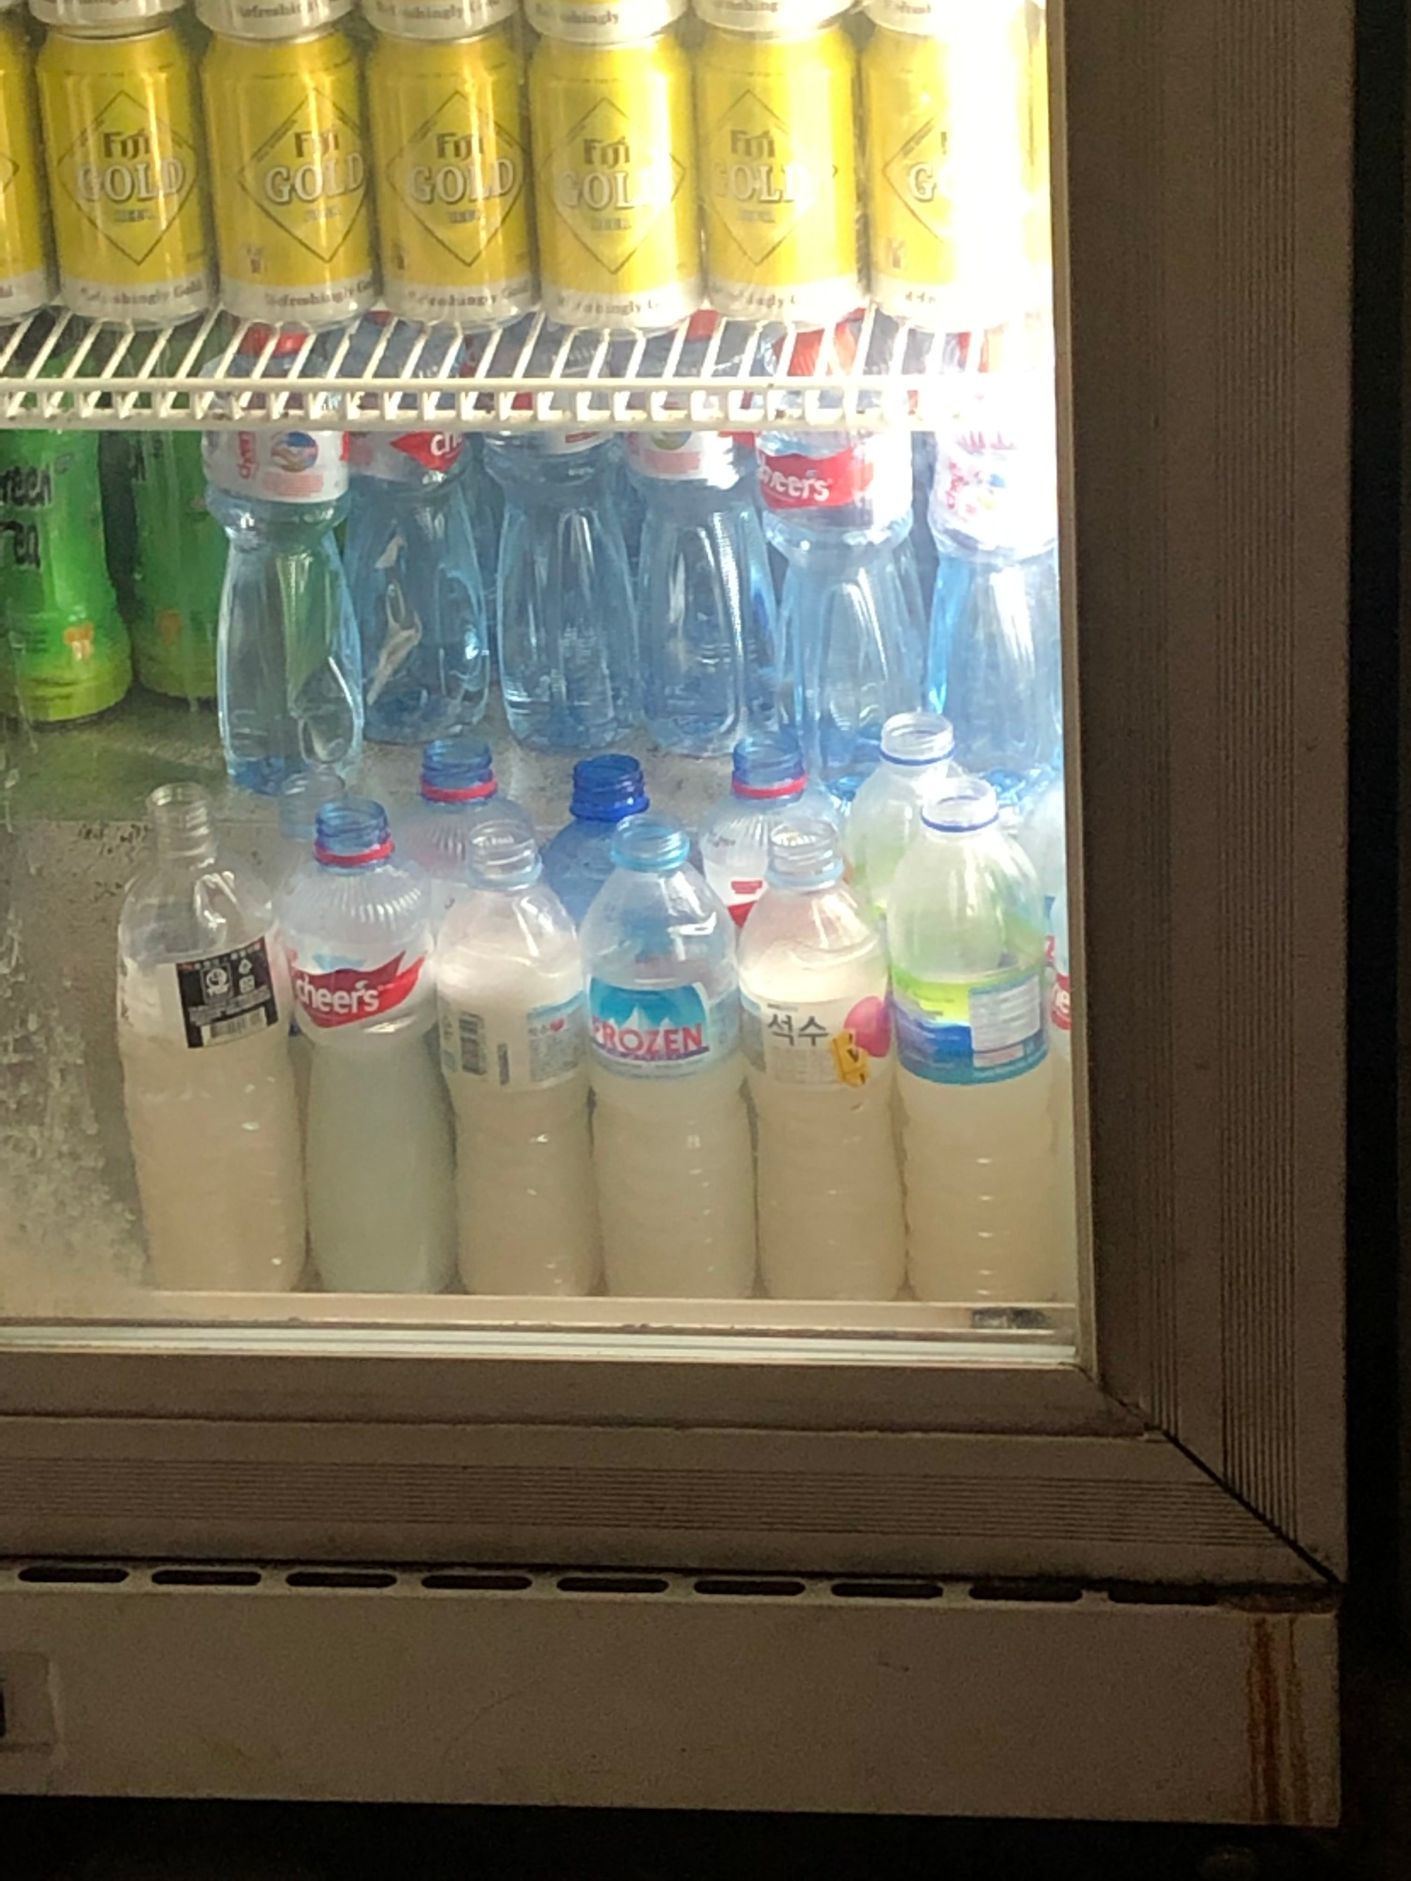 plastic bottles in the fridge containing a local drink in Kiribati